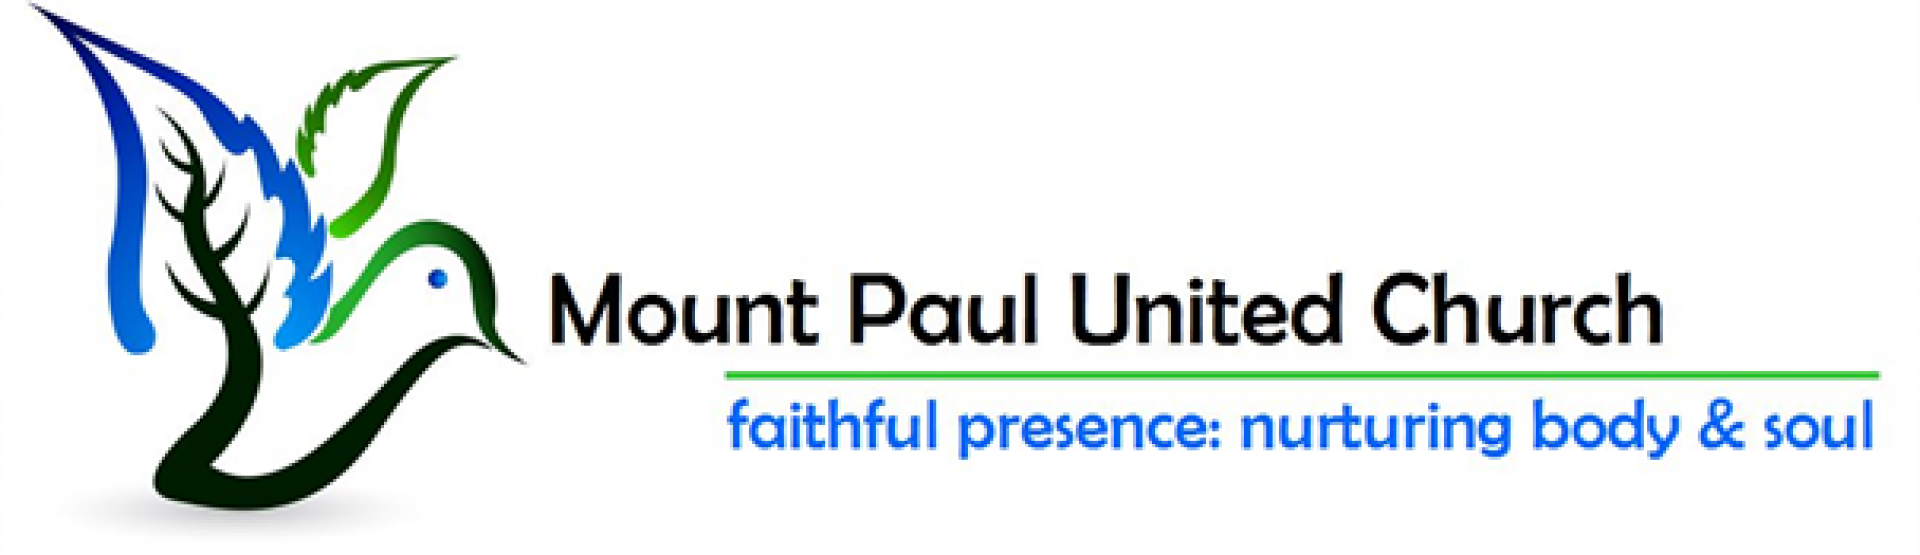 Mount Paul United Church